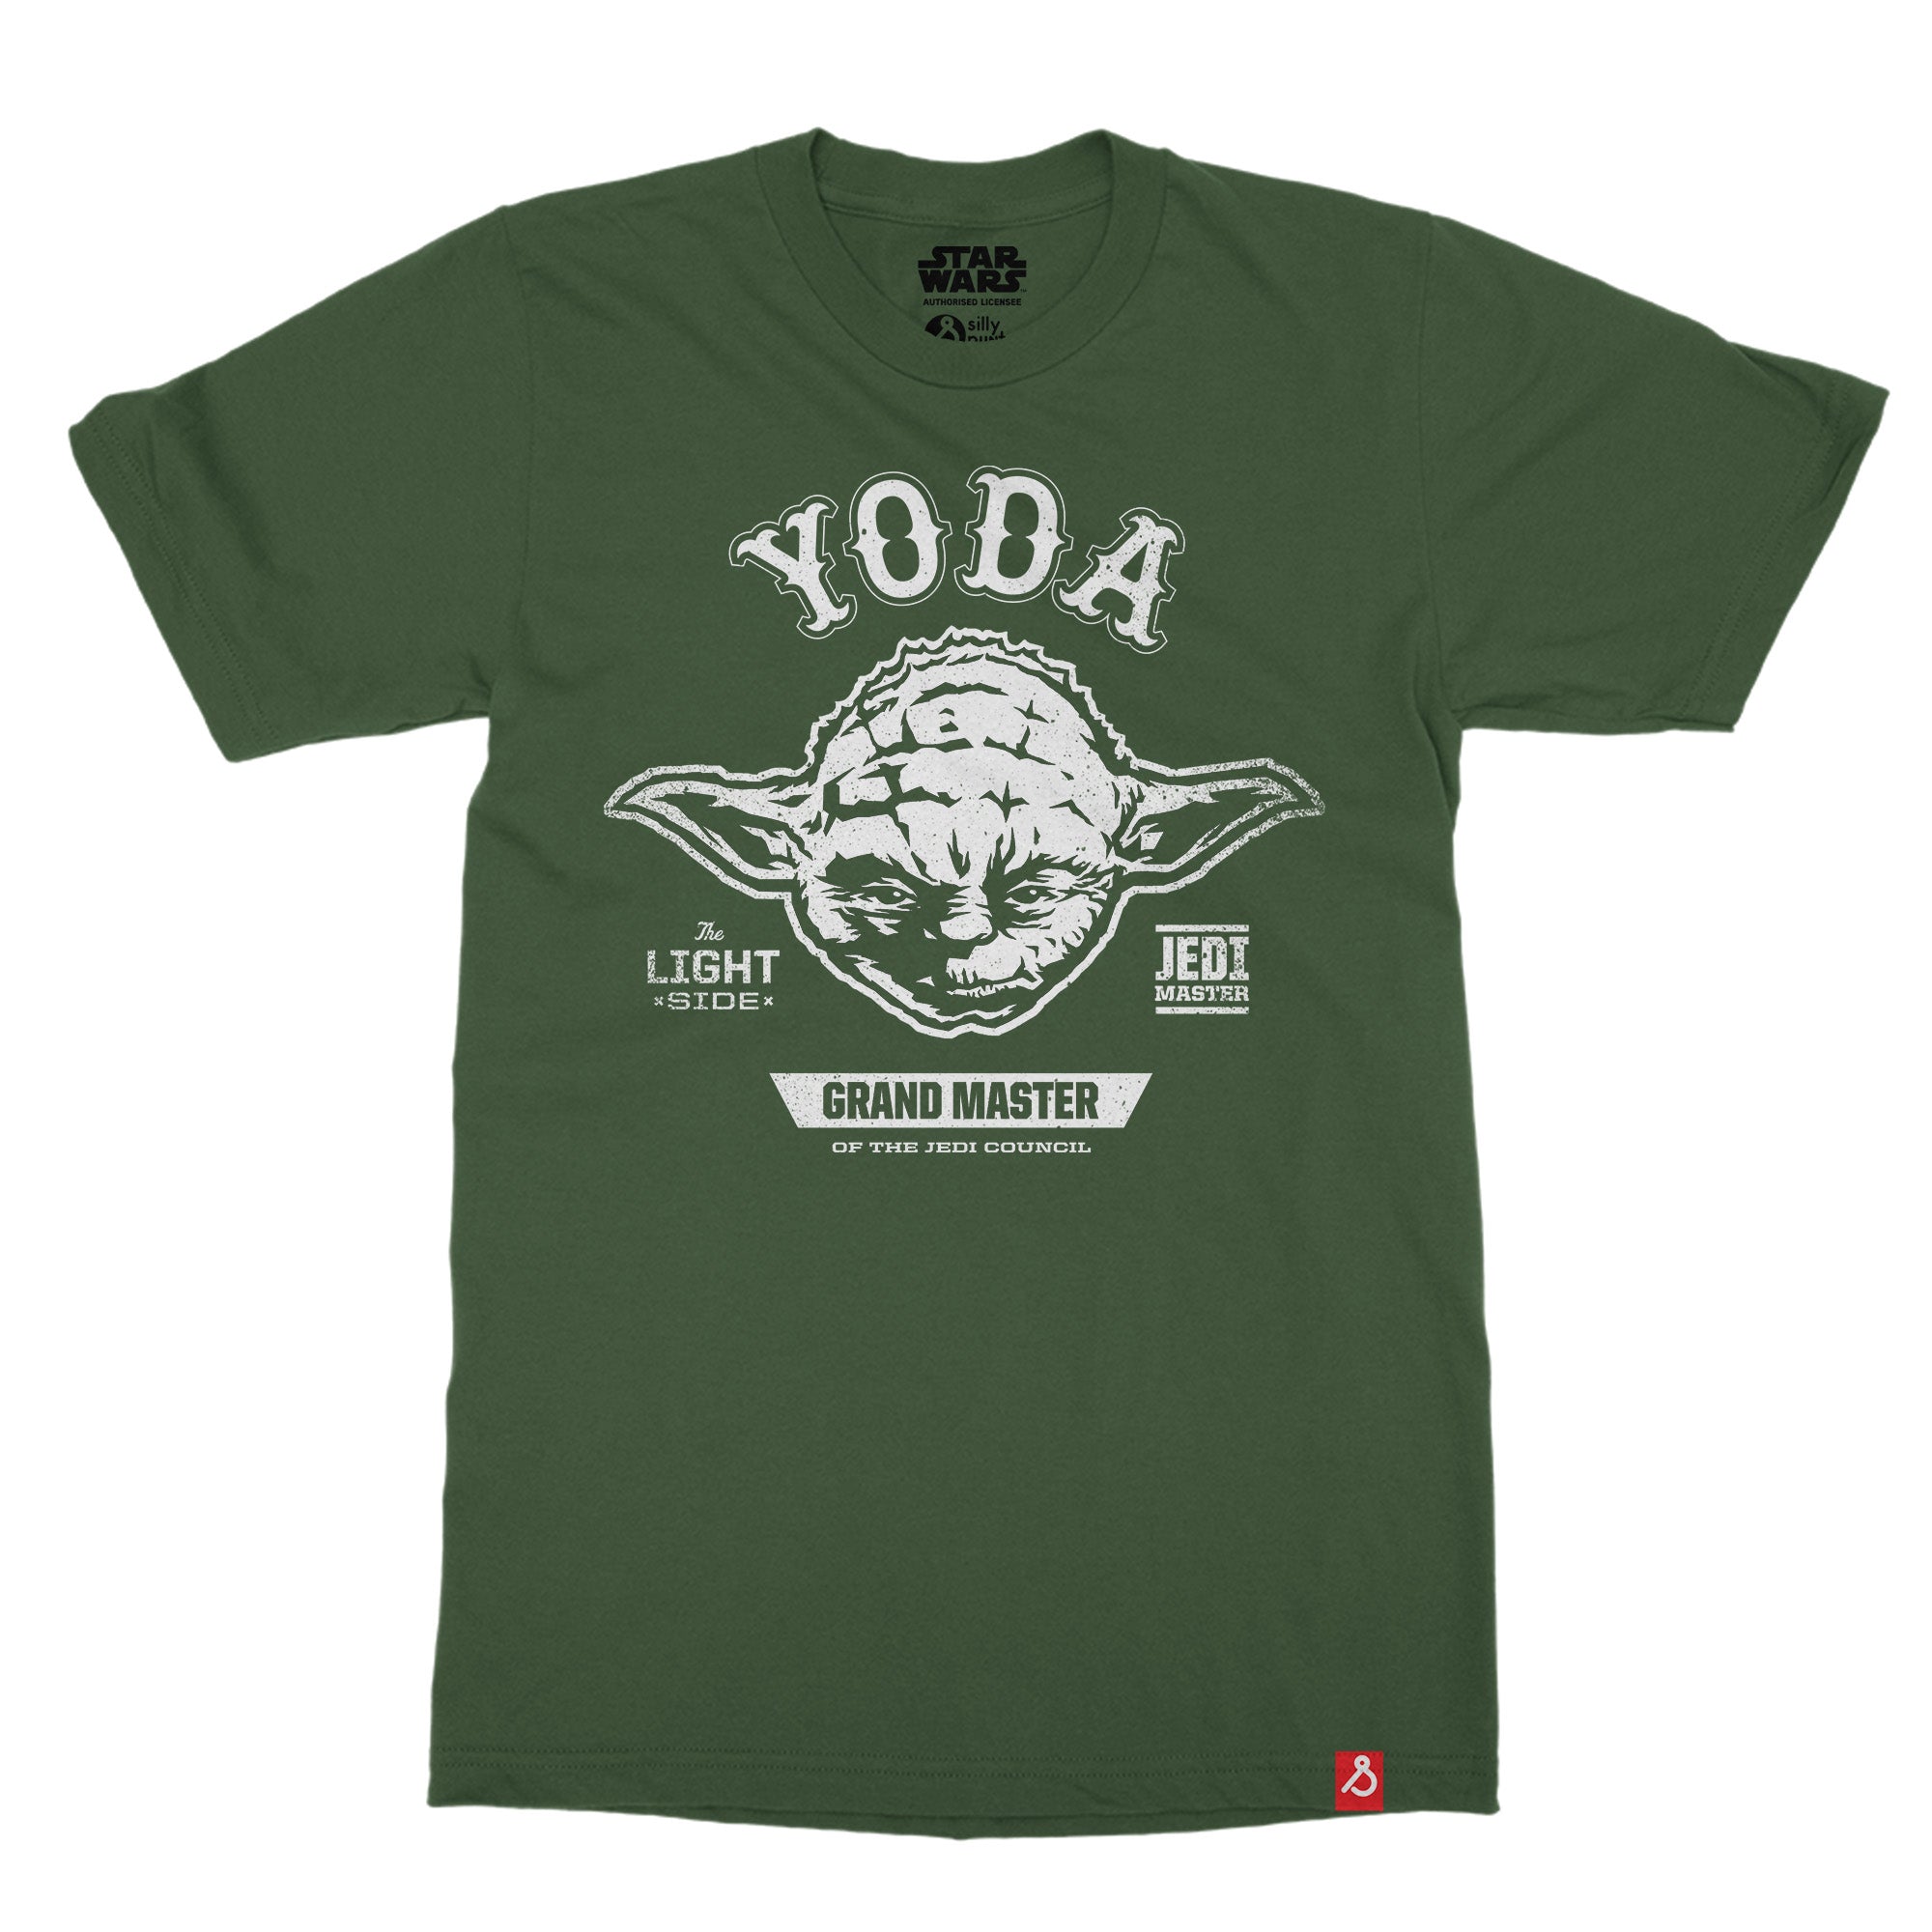 yoda t shirt india